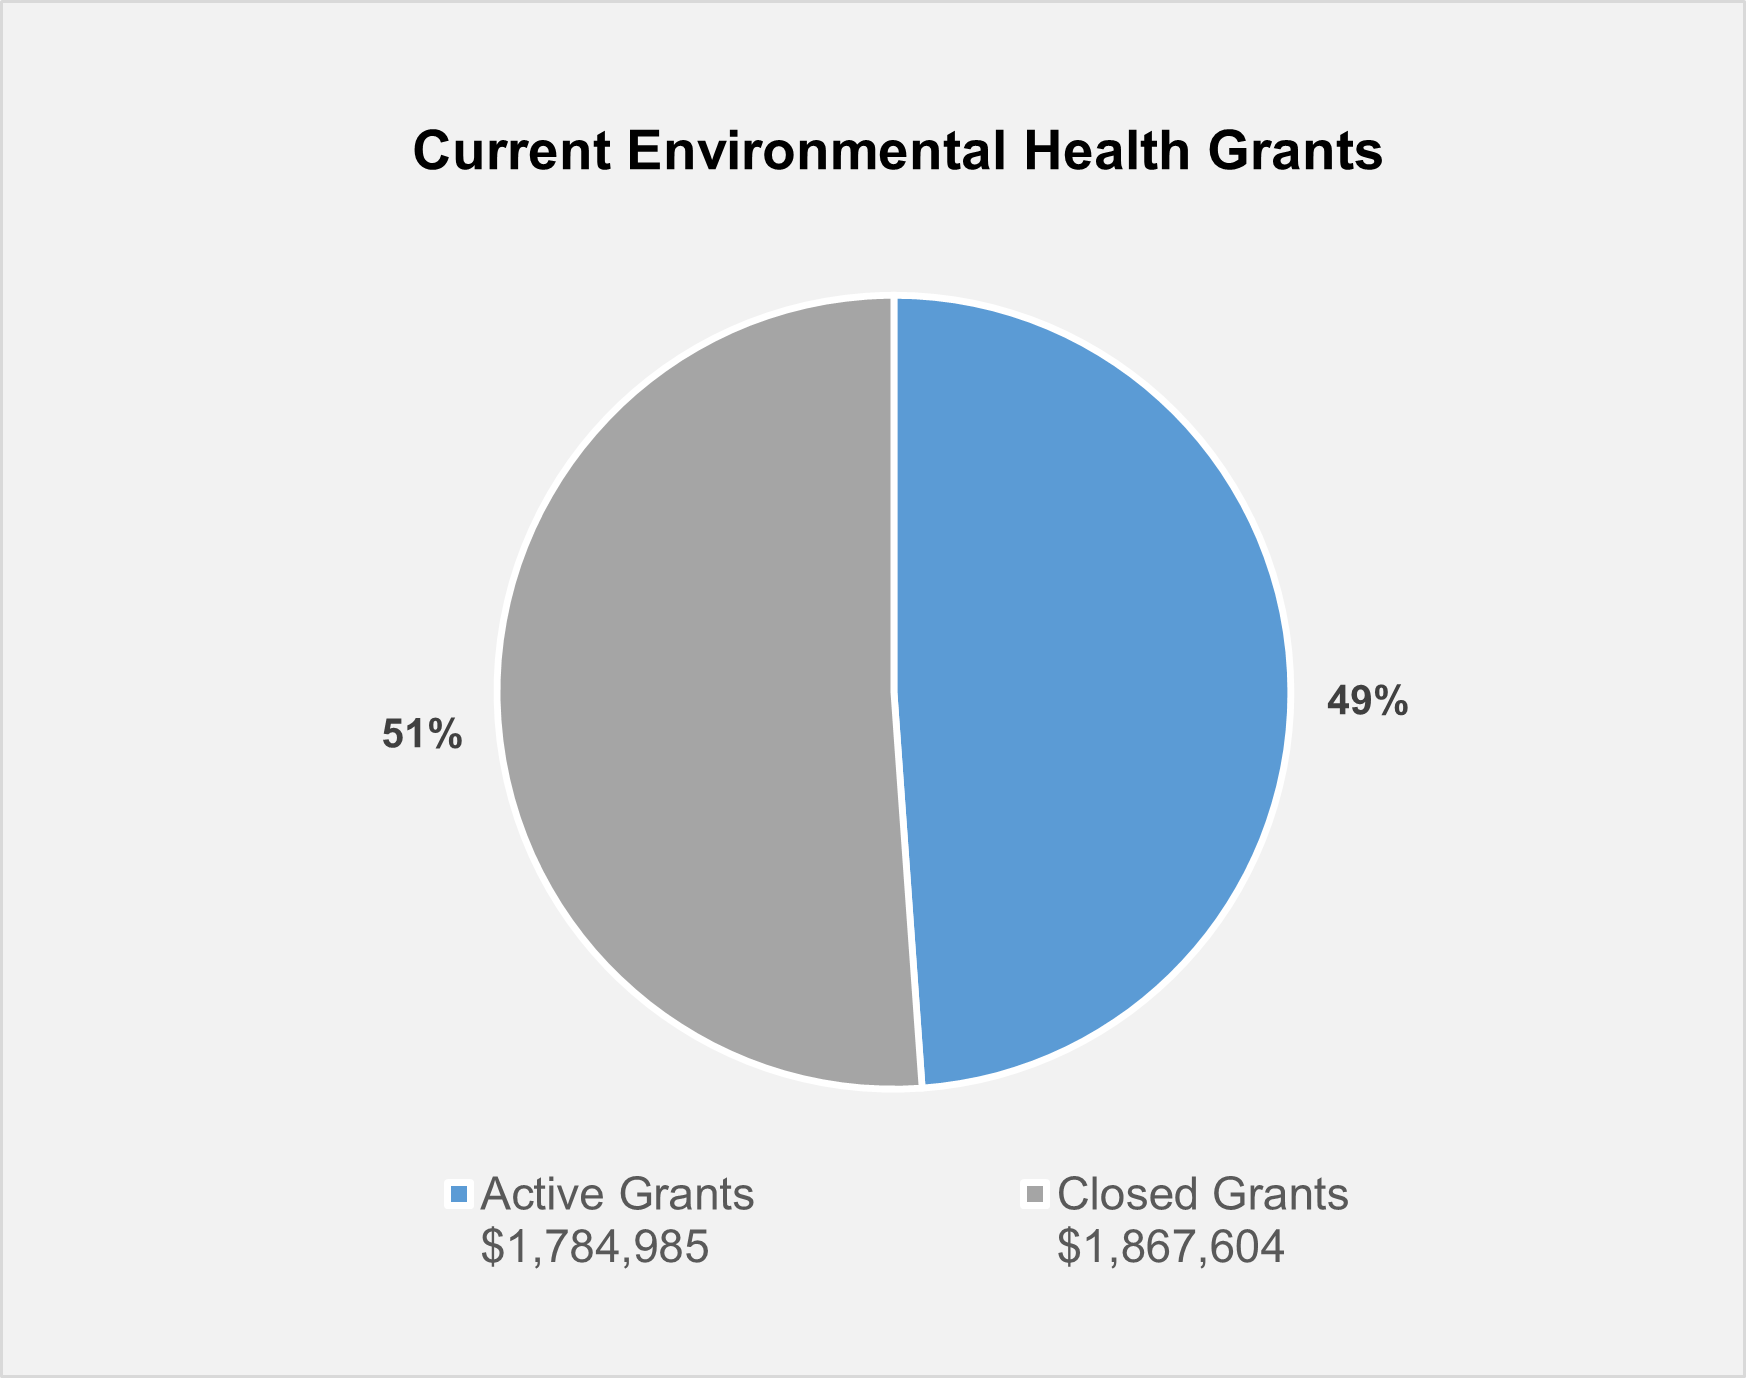 Current Environmental Health Grants pie chart